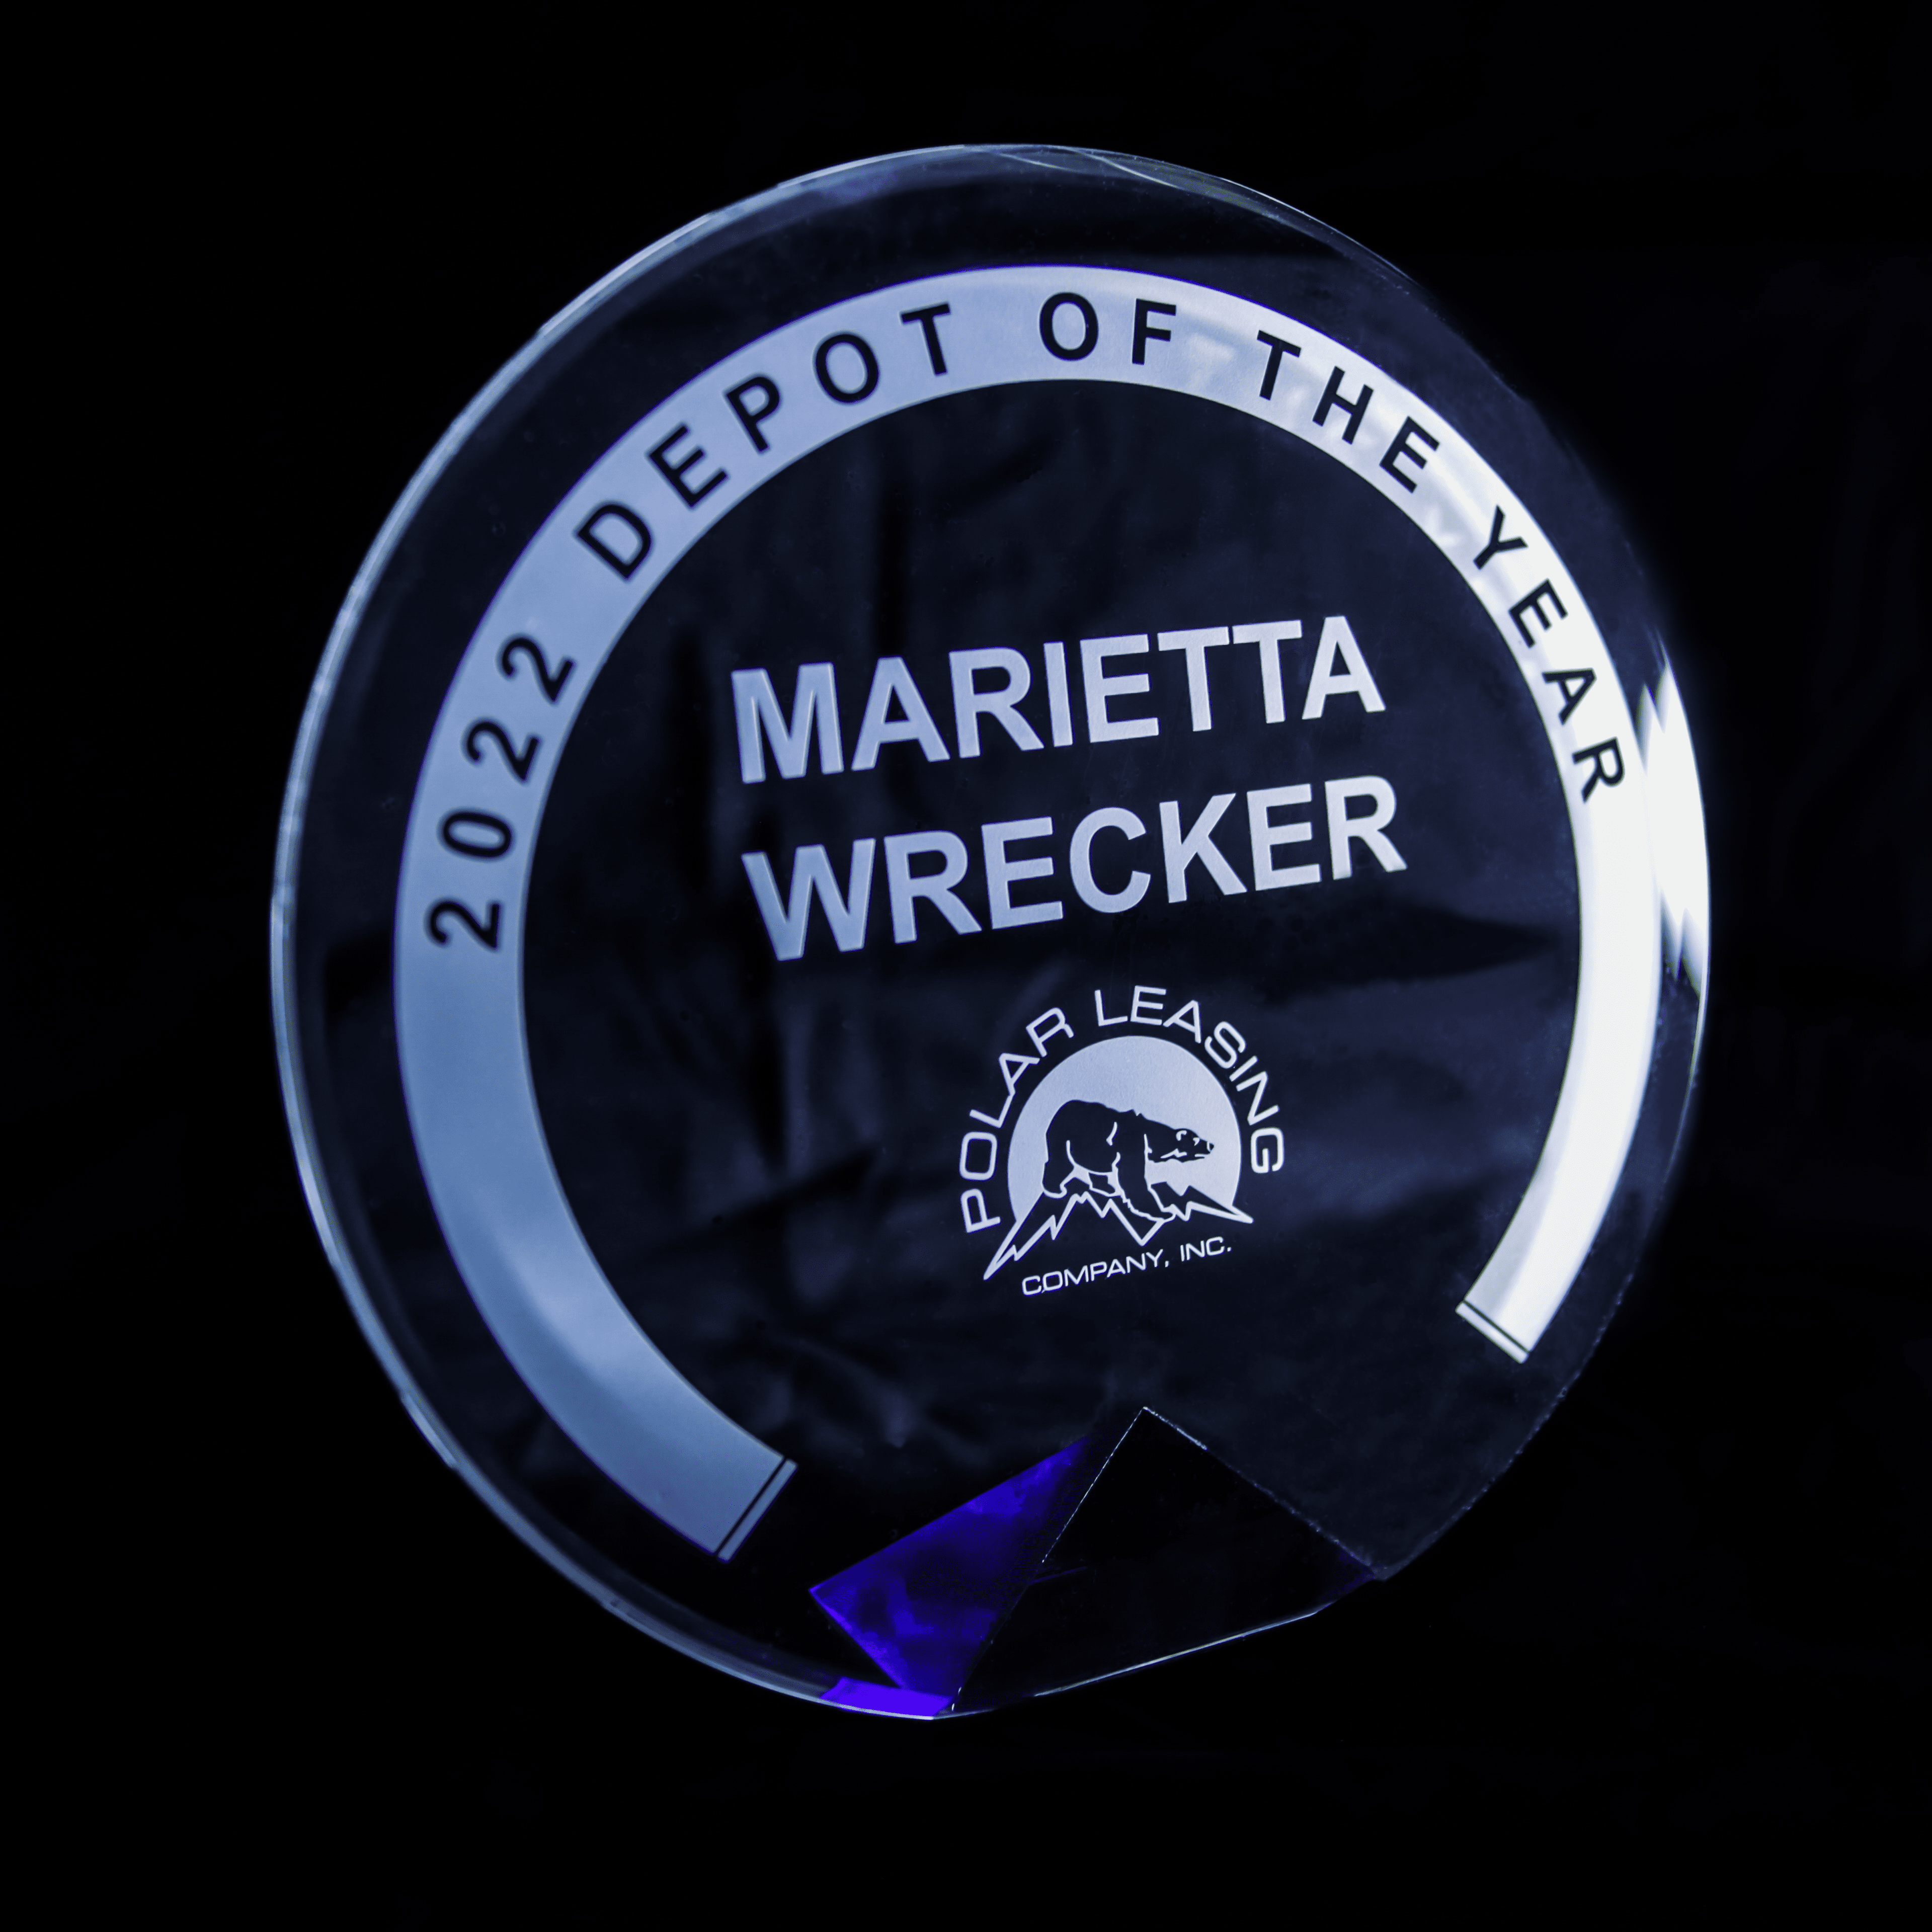 Marietta Wrecker